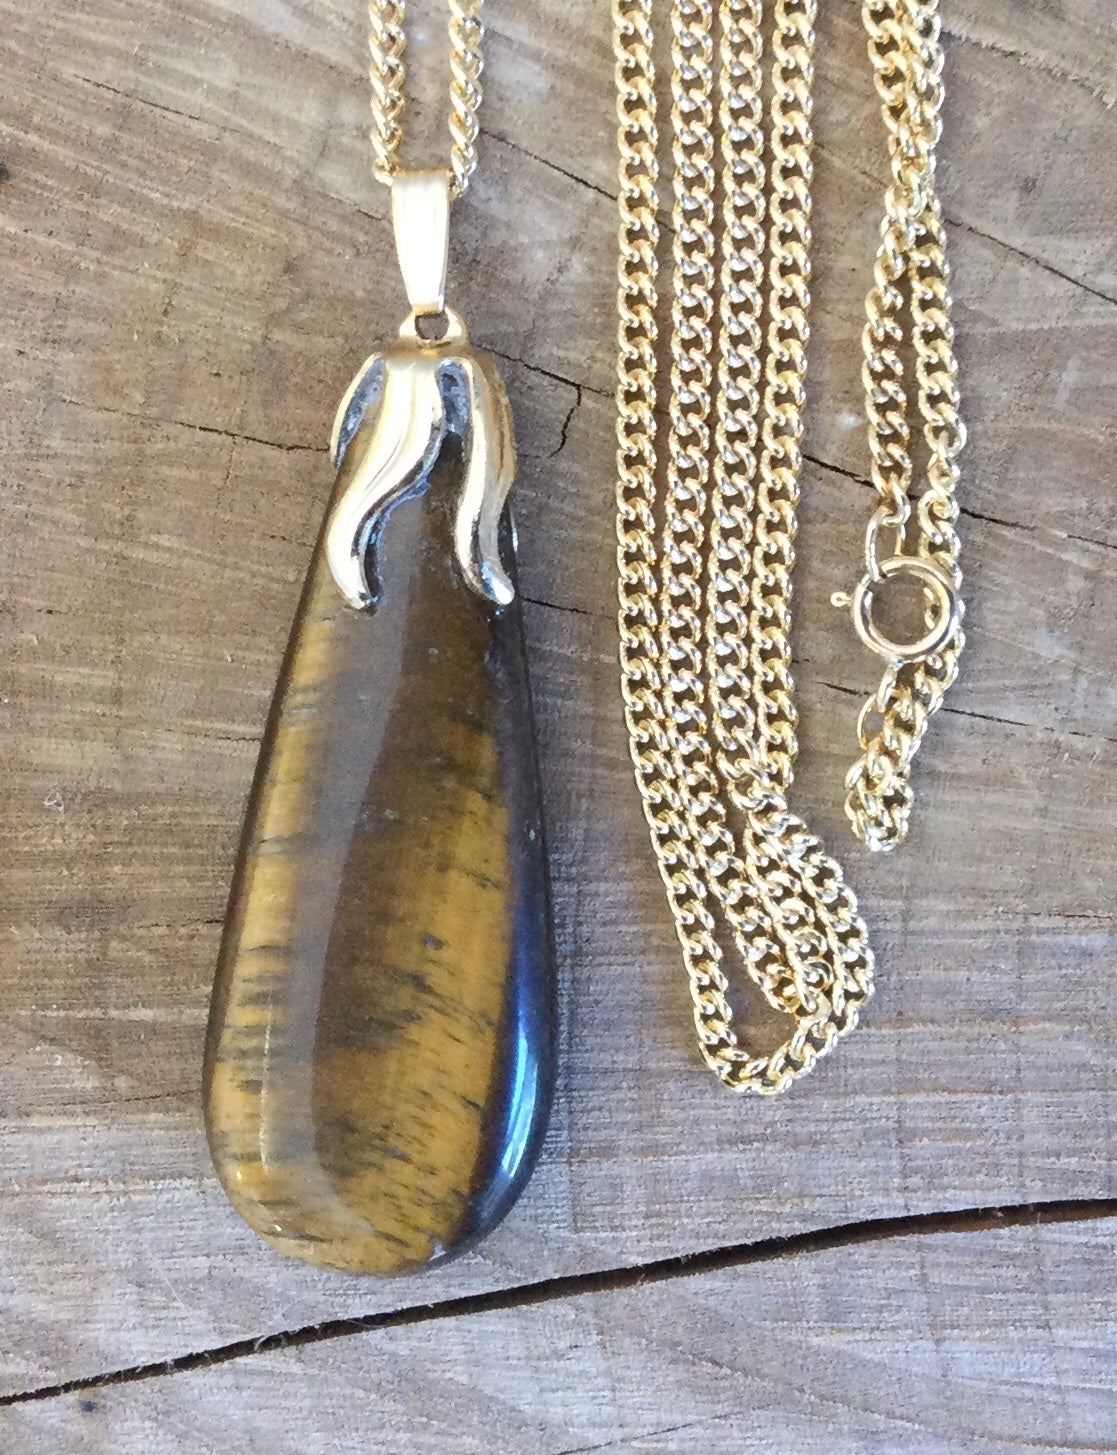 Tigereye pendant with chain